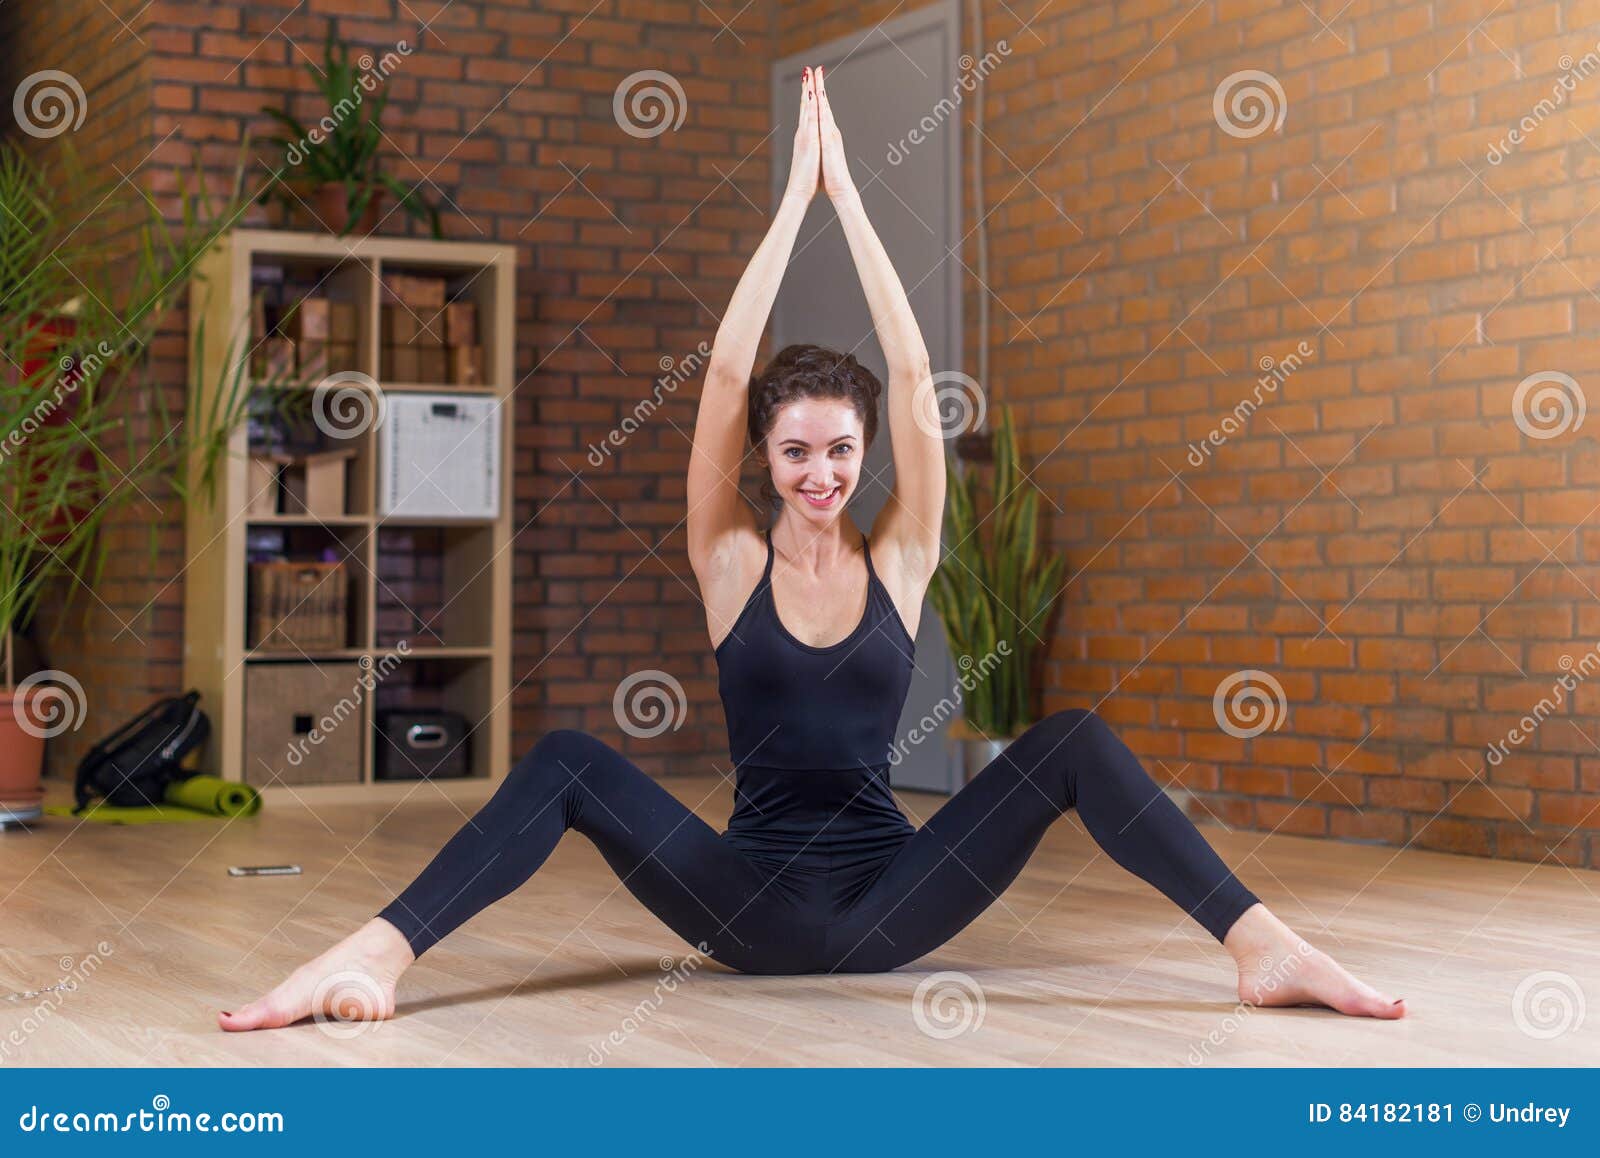 Spread Leg Woman Sitting On Floor Hot Girl Hd Wallpaper